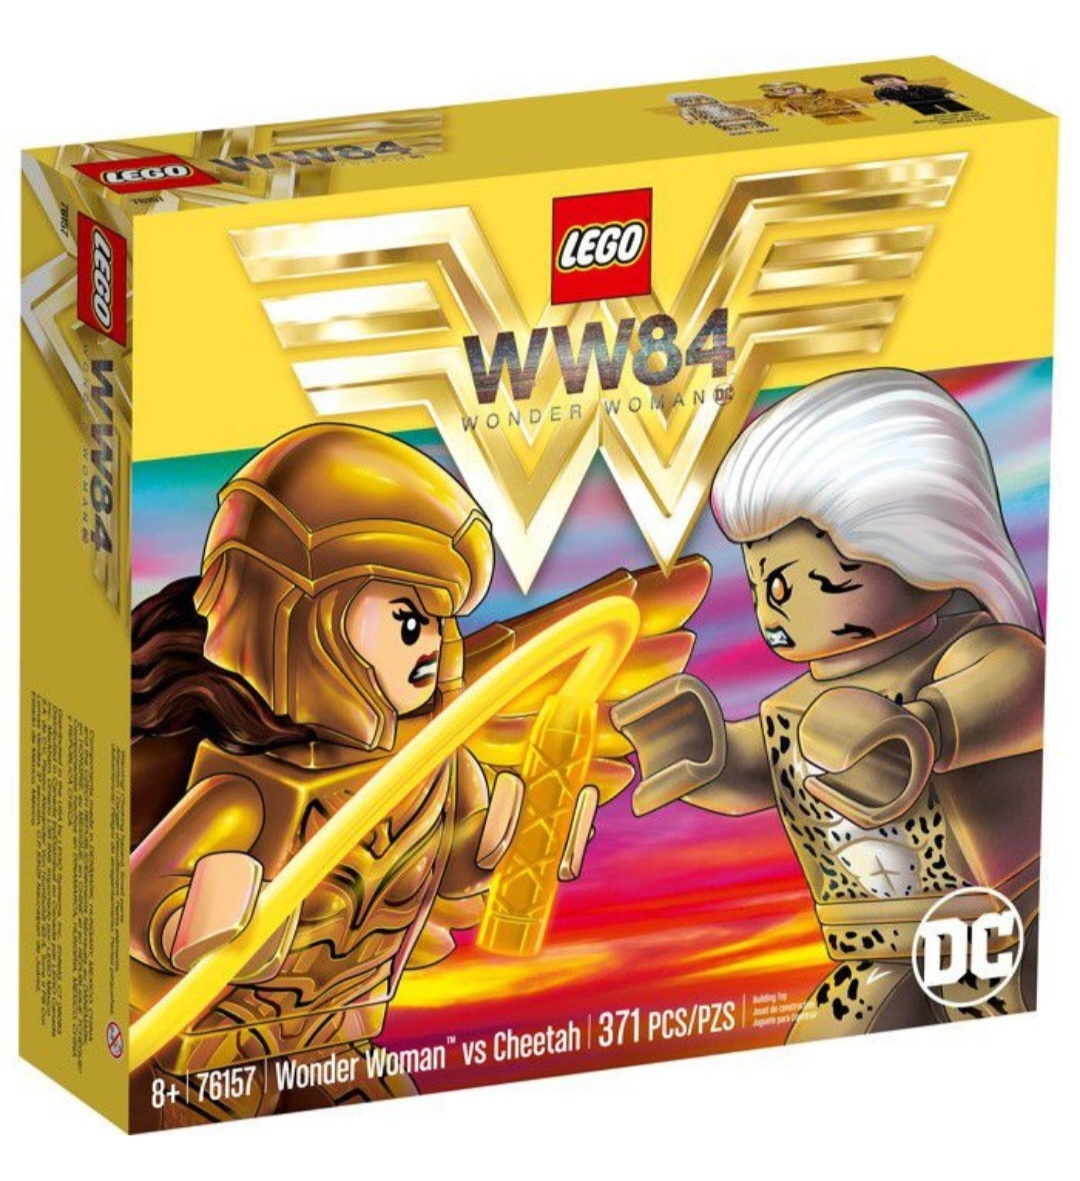 LEGO | Wonder Woman 84 | WW84 | 76157